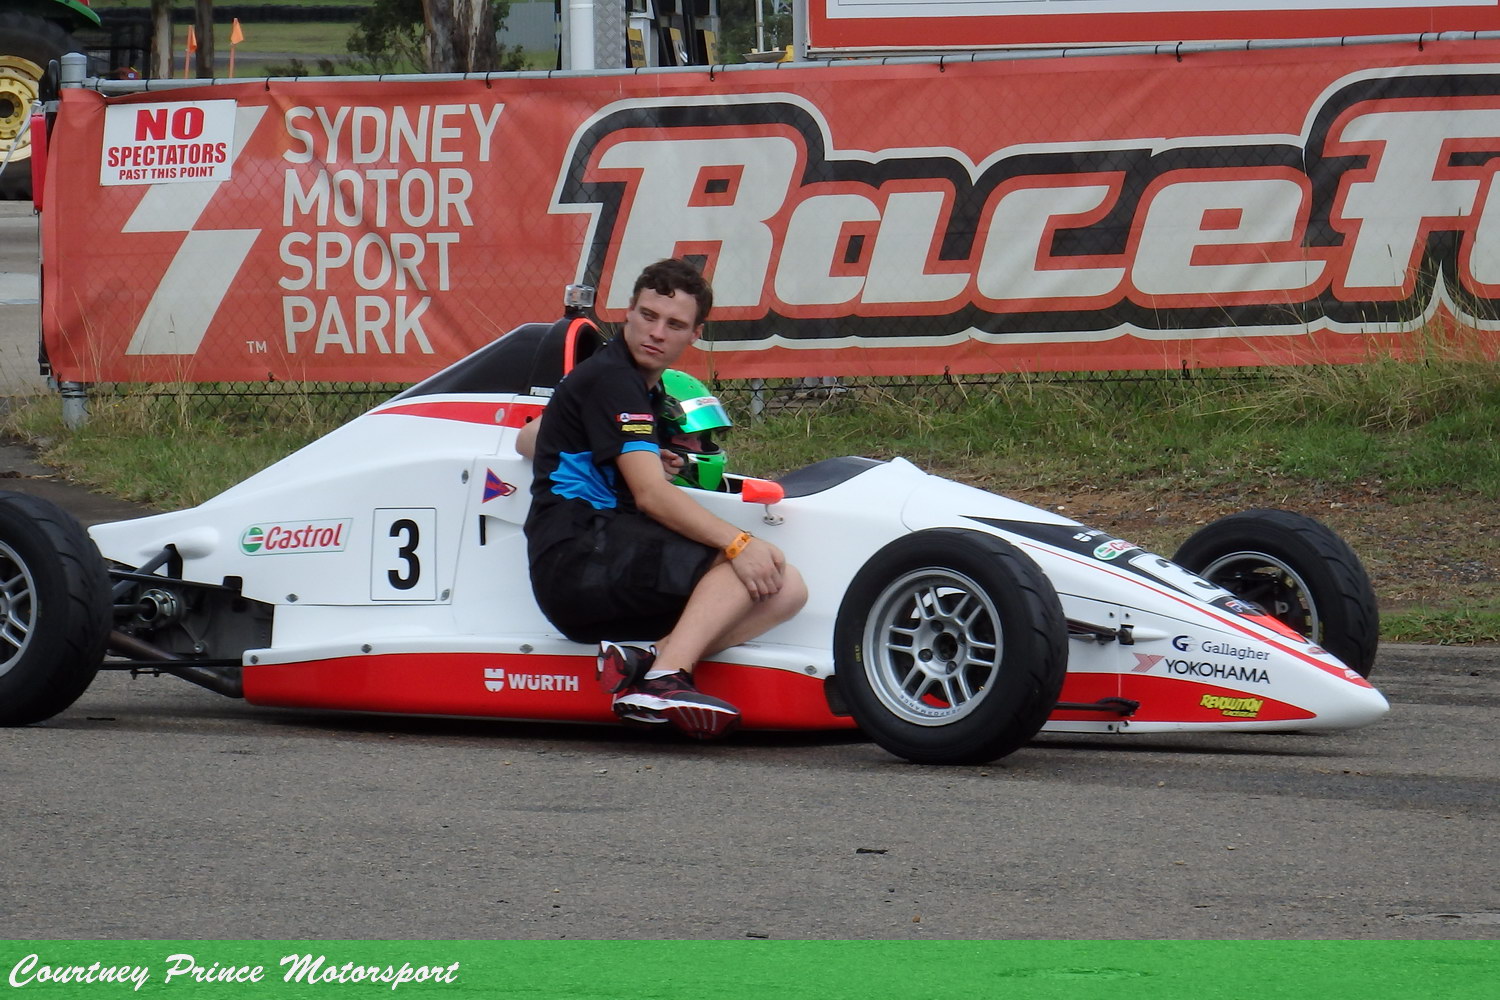 2019-04 Sydney Motorsport Park. Courtney Prince Motorsport, April 2019.